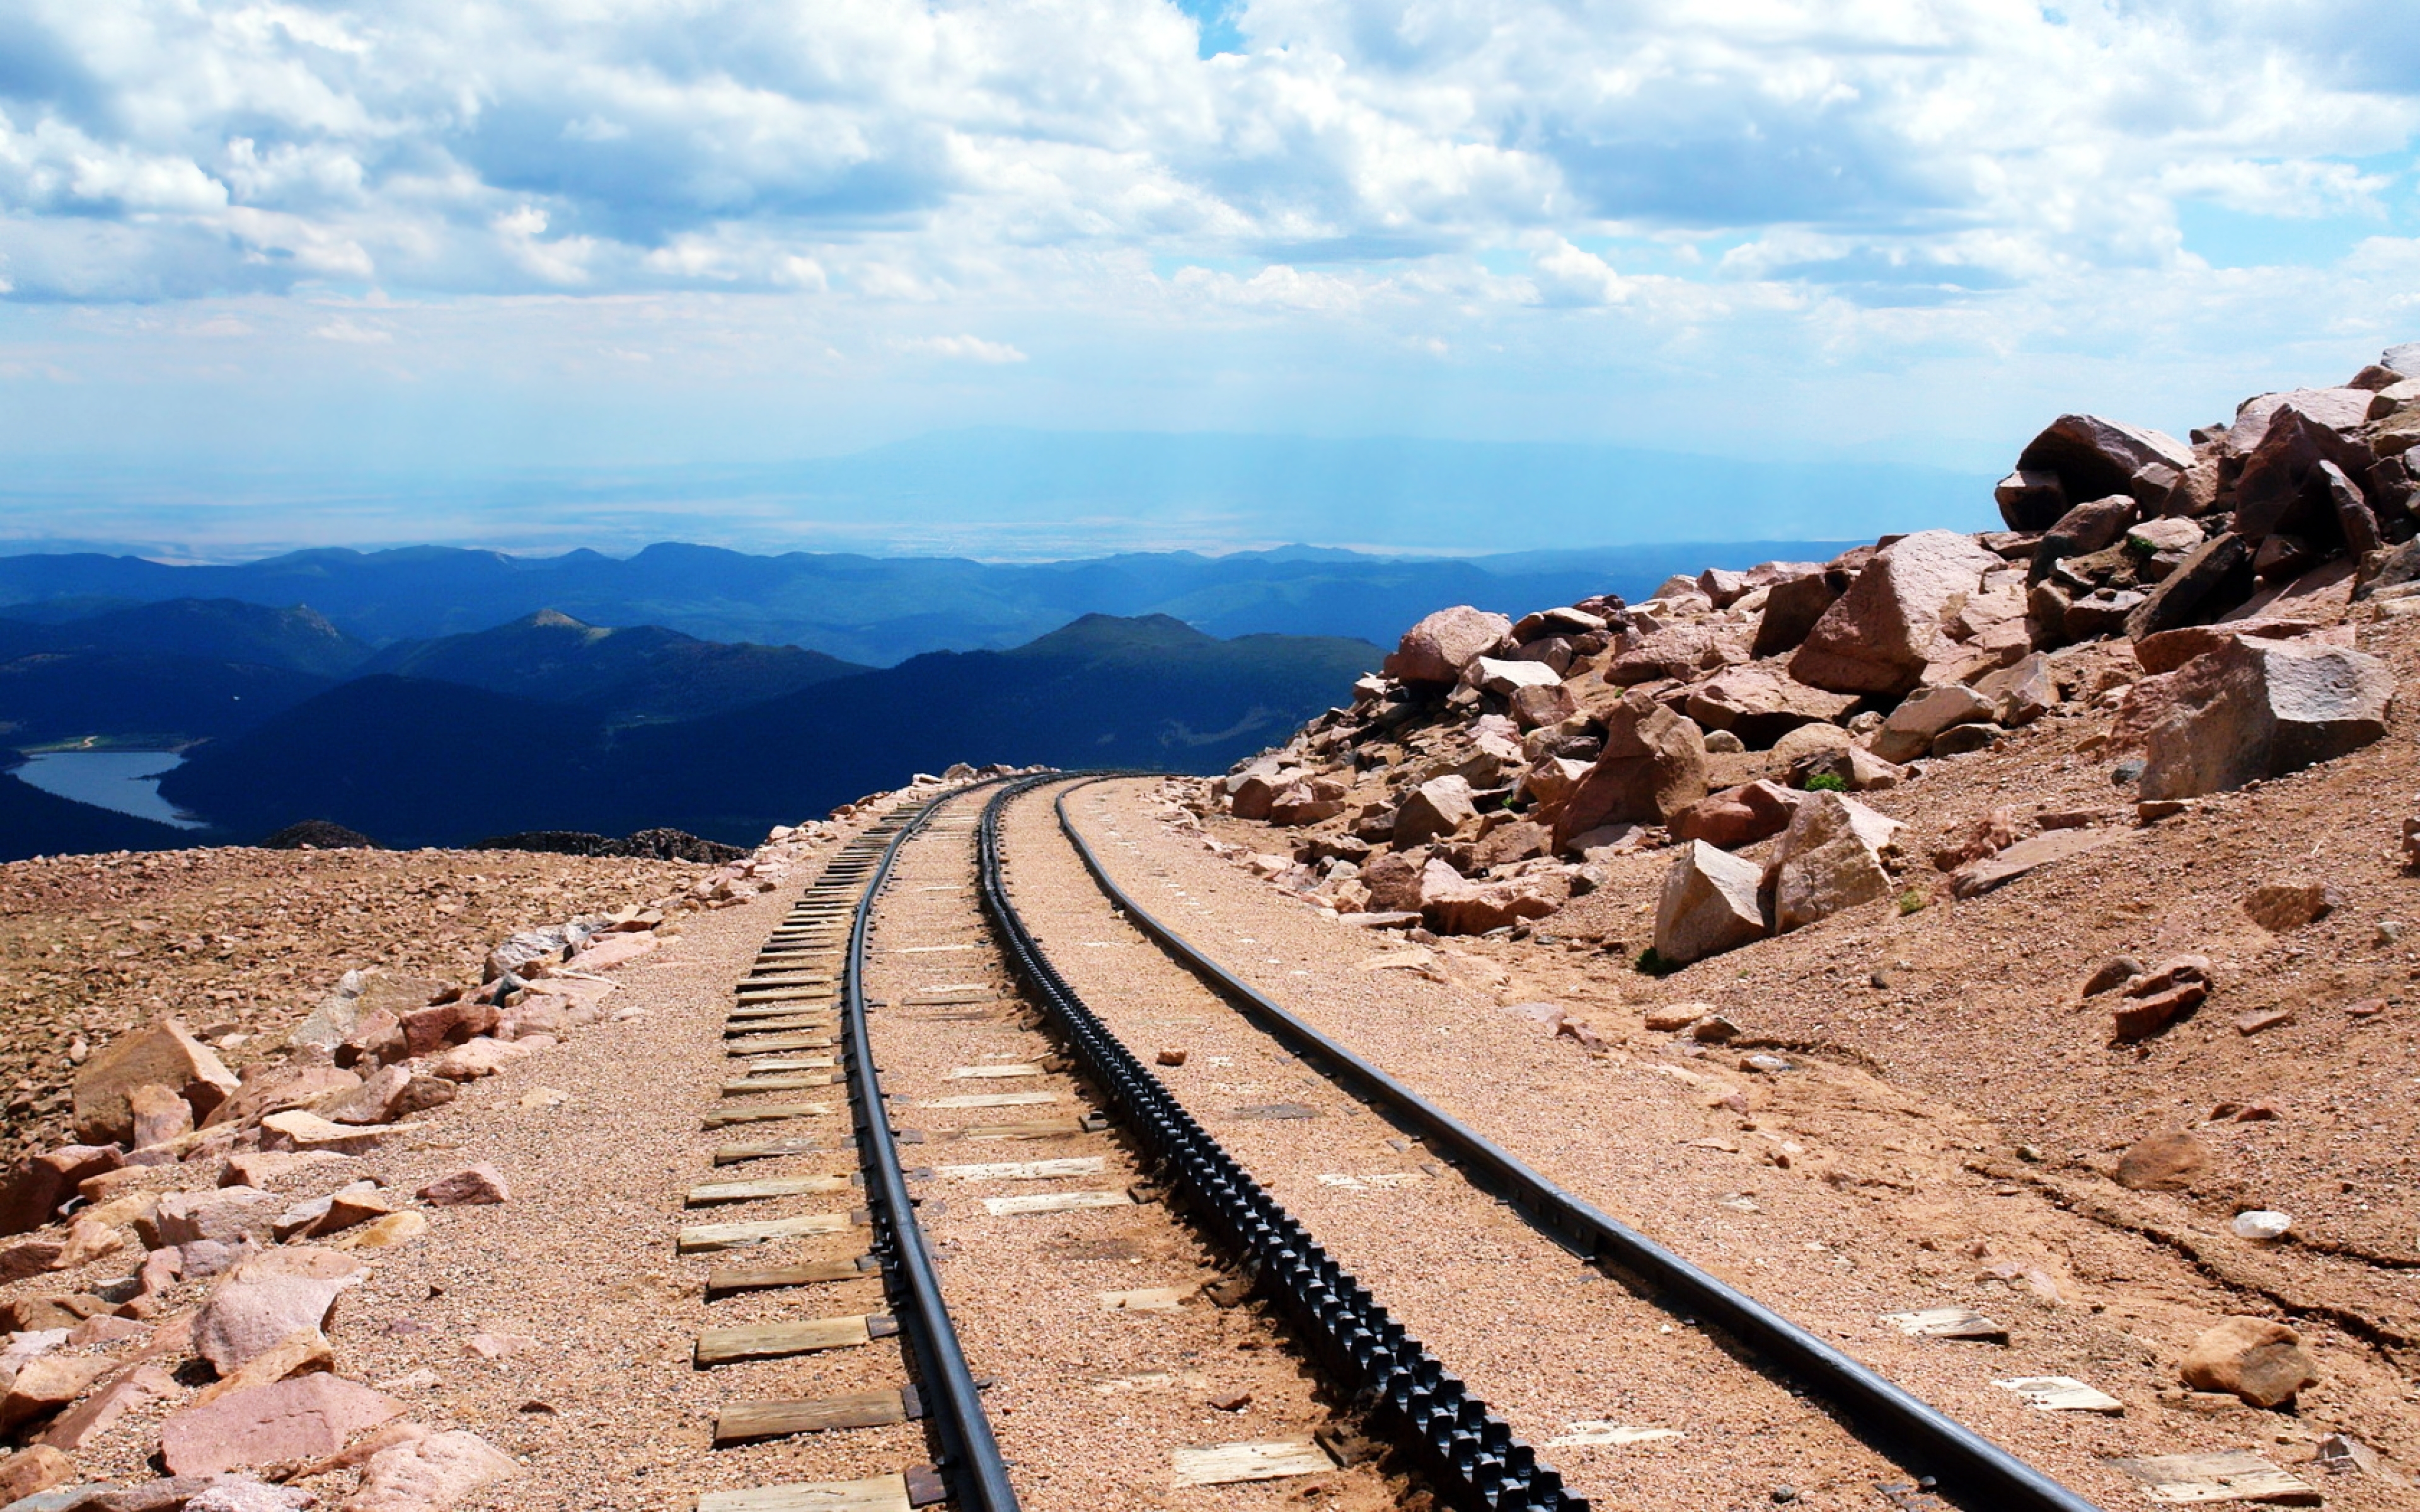 Дли пути. Железная дорога. Железнодорожные пути. Железная дорога в горах. Железная дорога в пустыне.